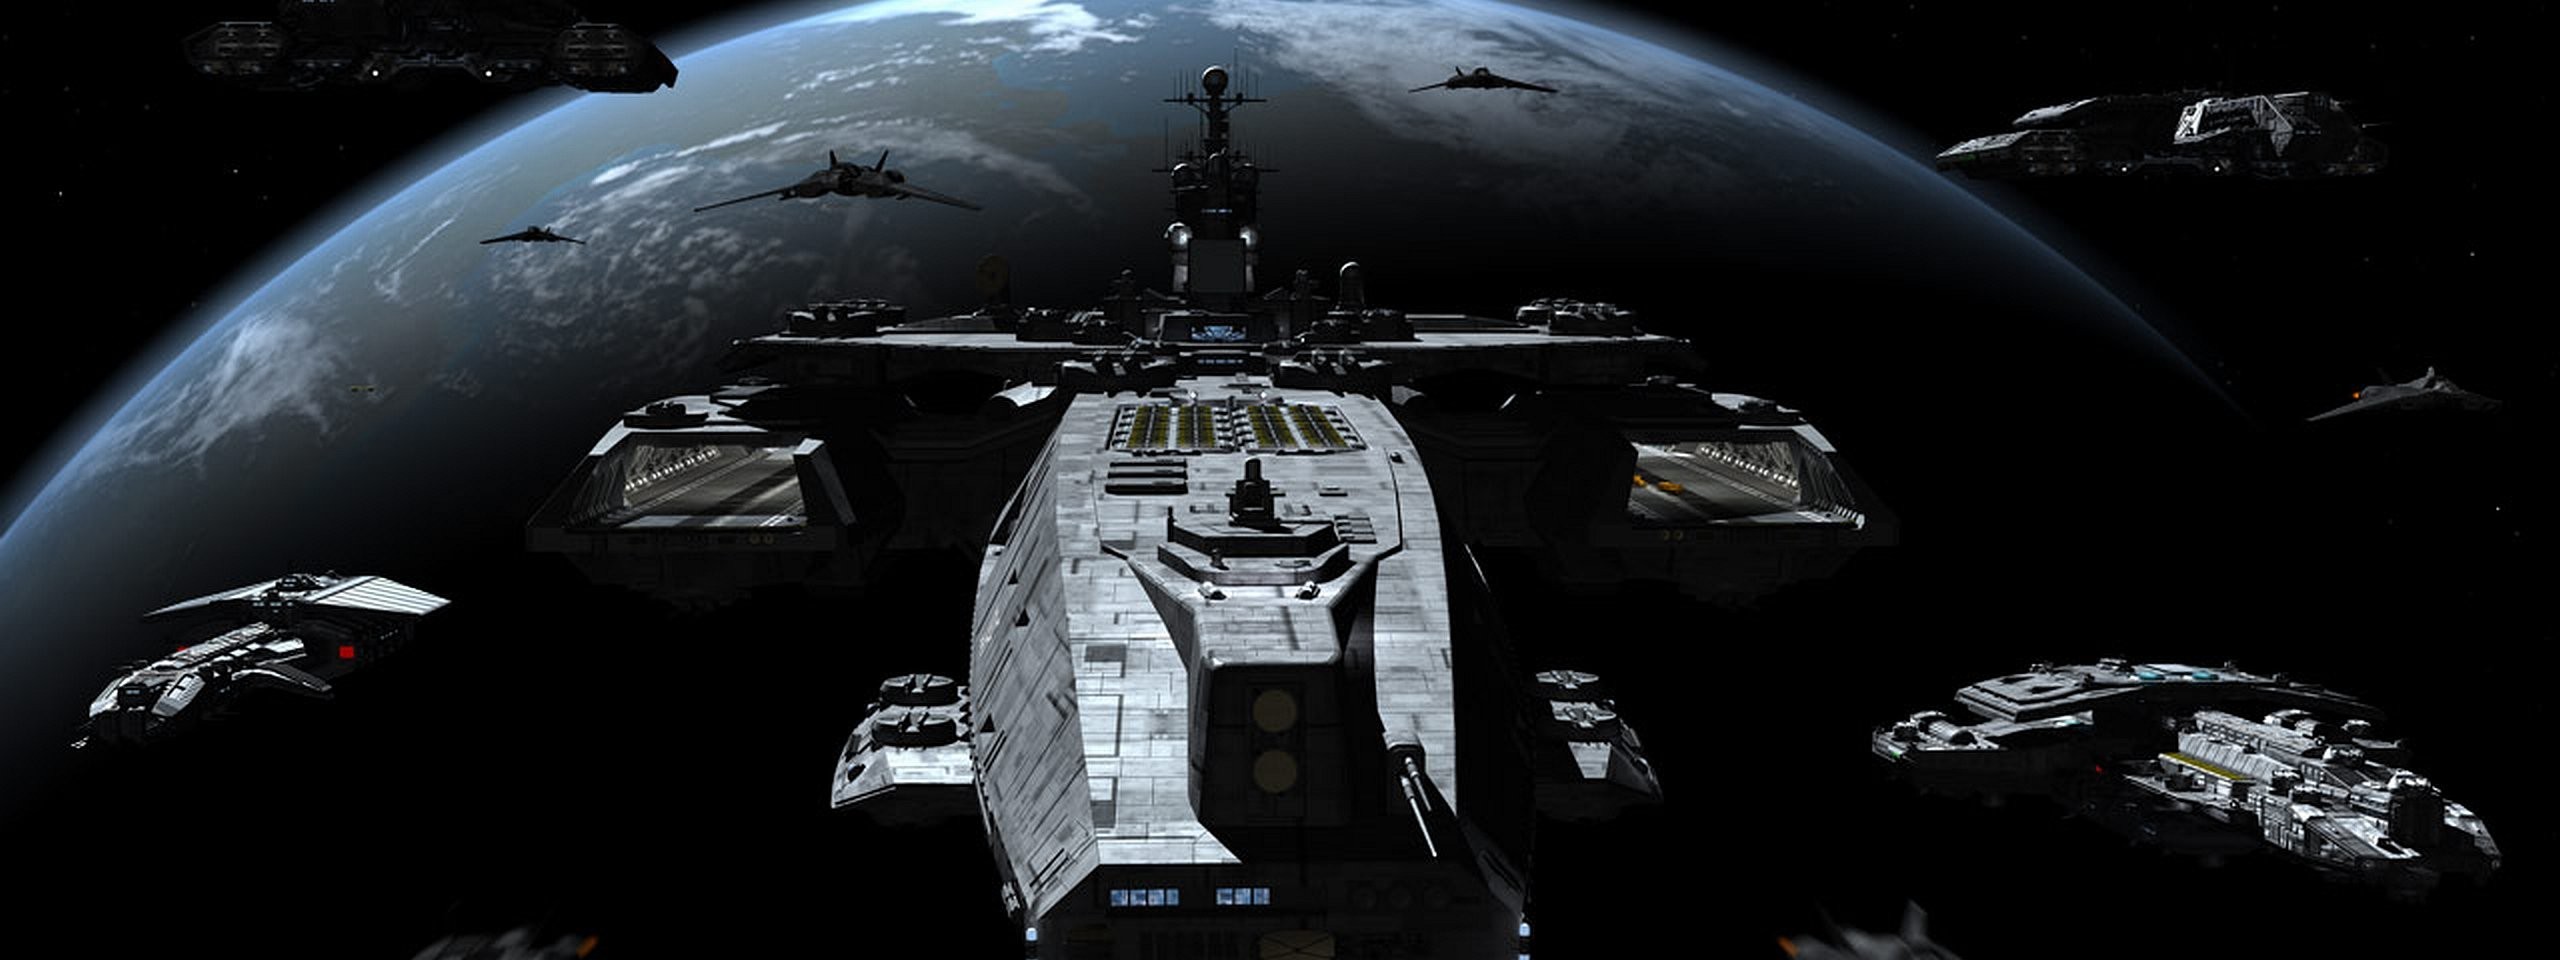 General 2560x960 Stargate Atlantis space planet digital art science fiction spaceship vehicle TV series